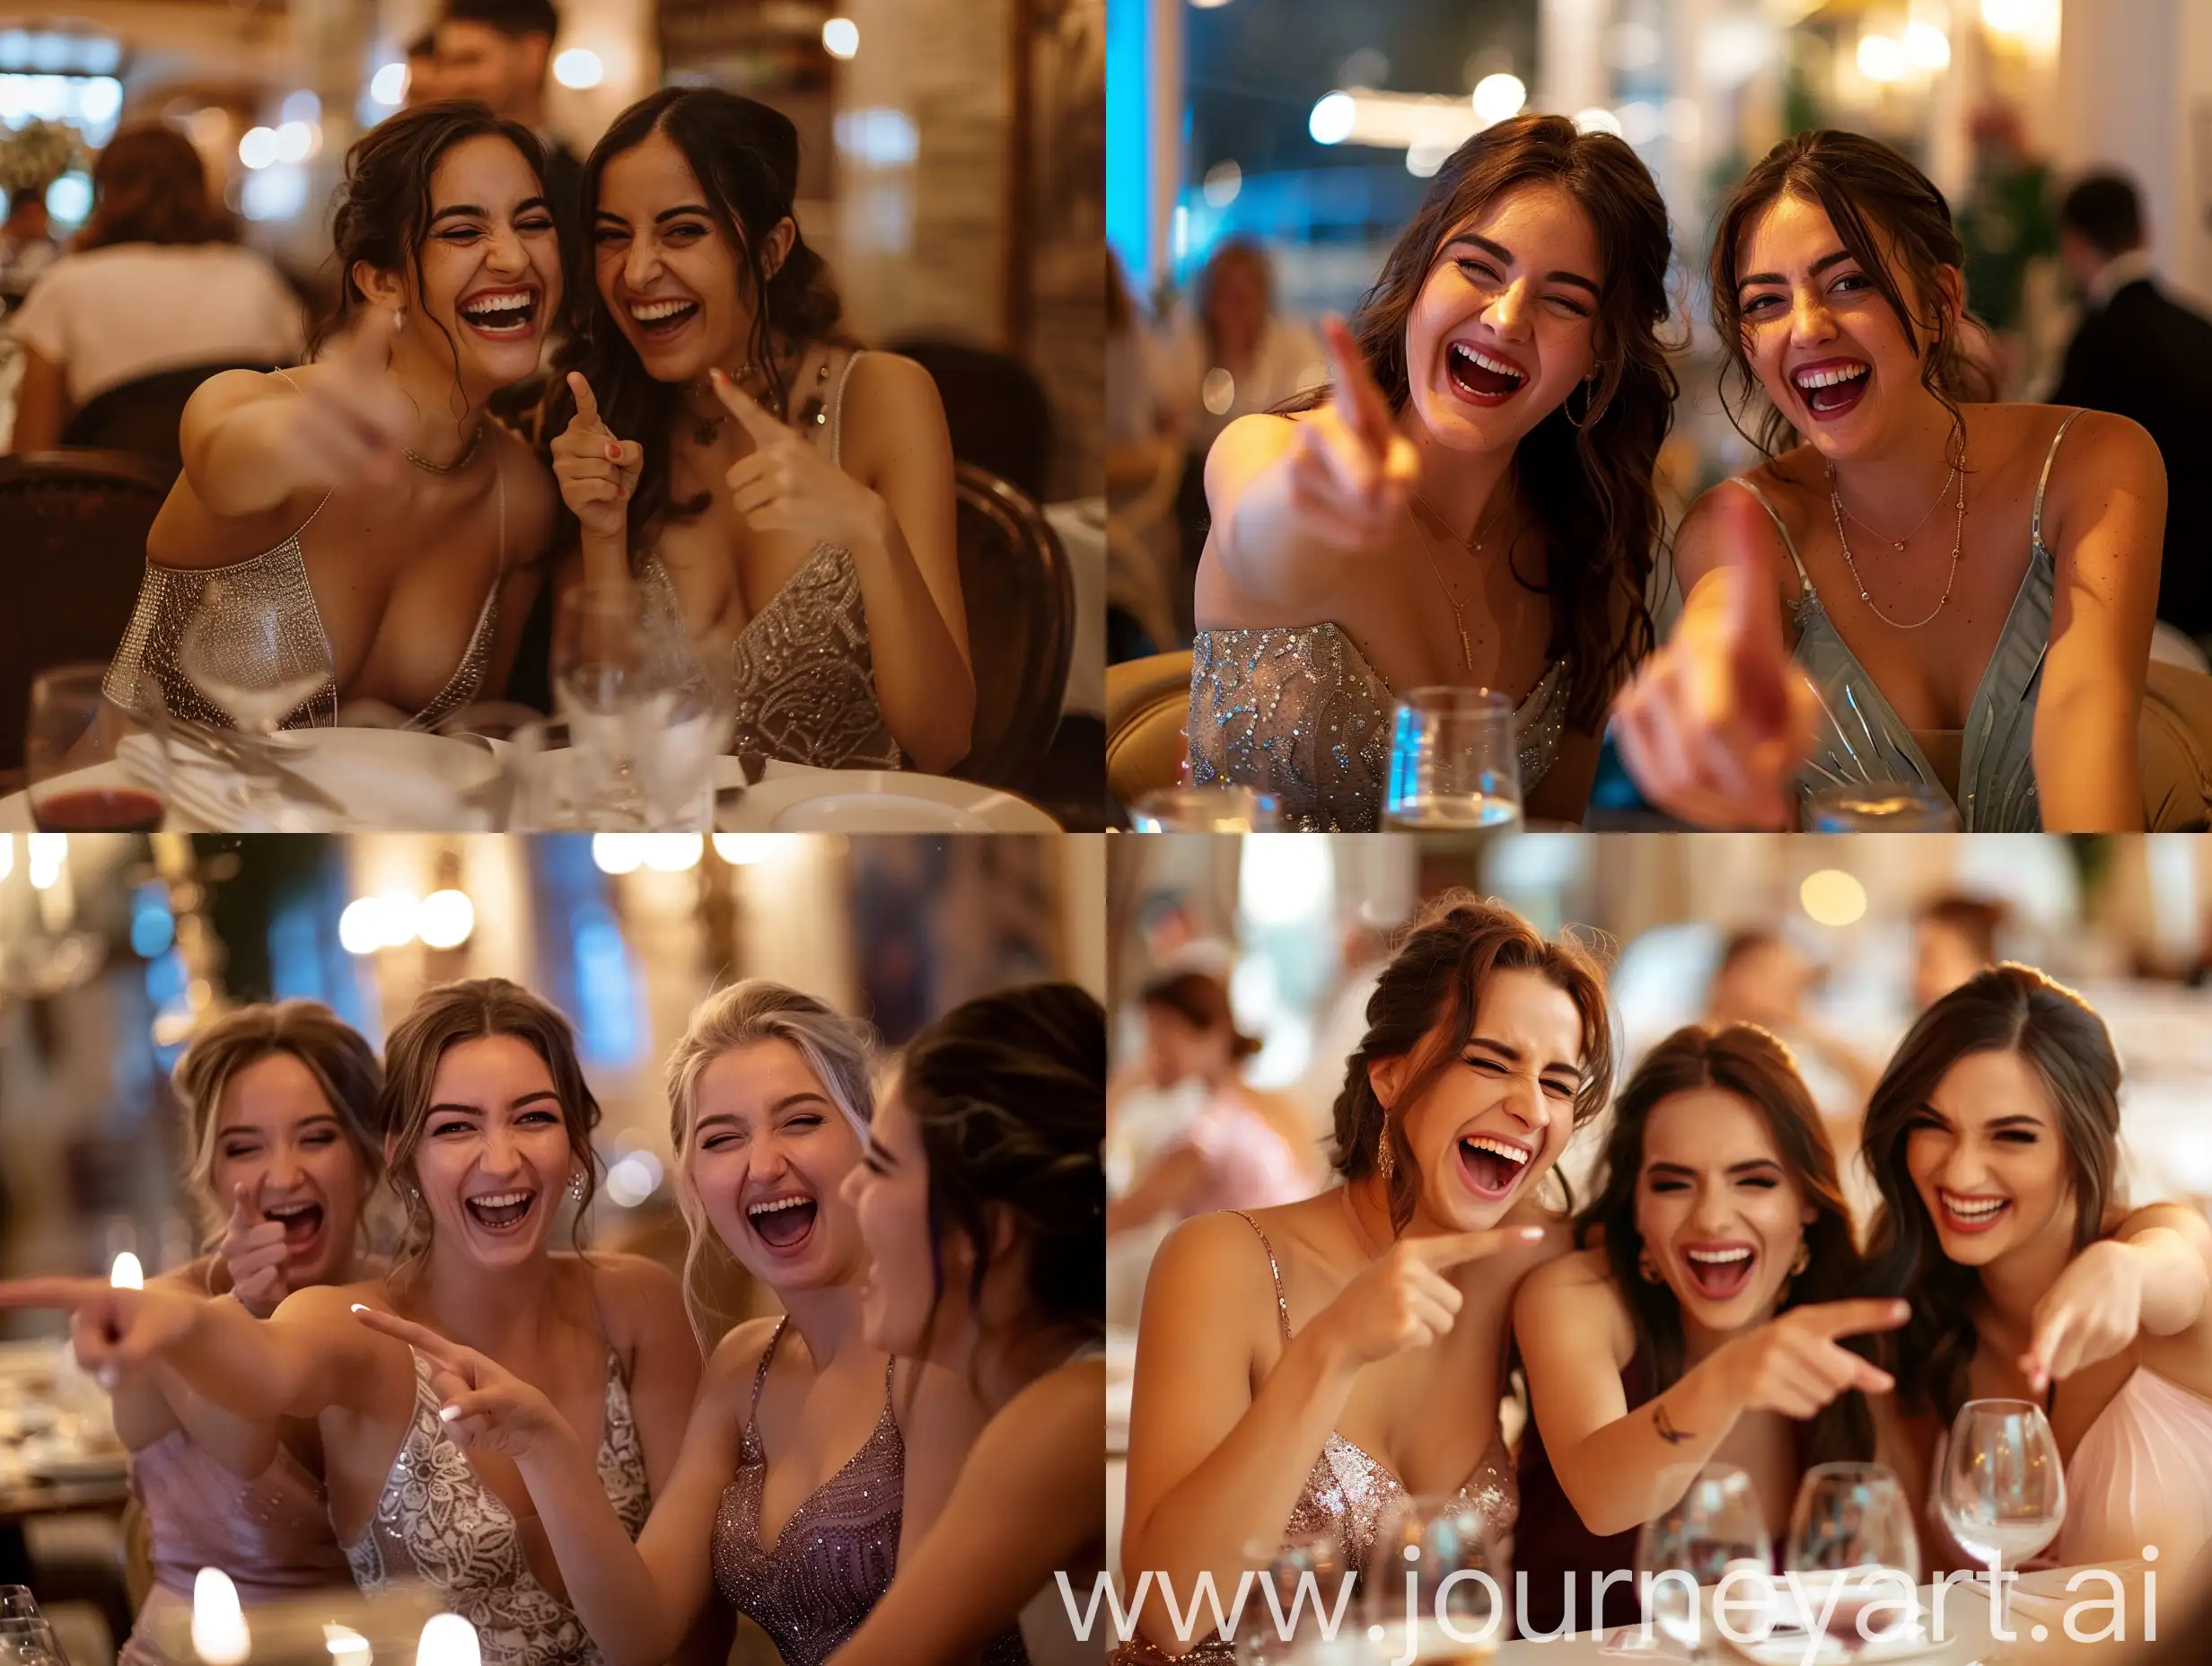 Elegant-Laughter-Girlfriends-Enjoying-a-Playful-Evening-in-Restaurant-Glamour